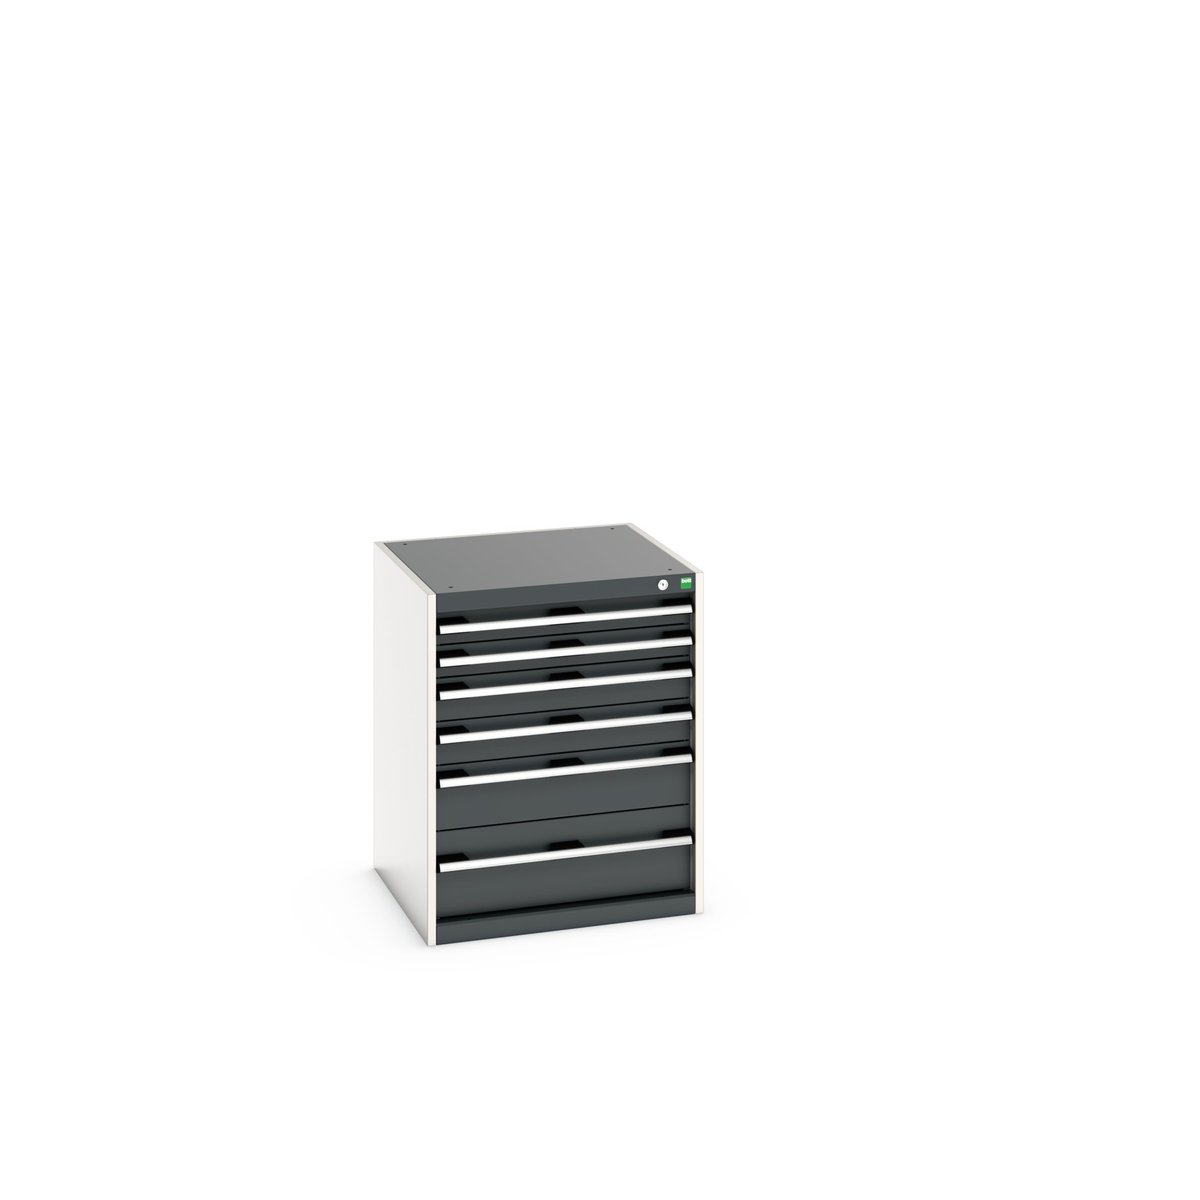 40019039. - cubio drawer cabinet